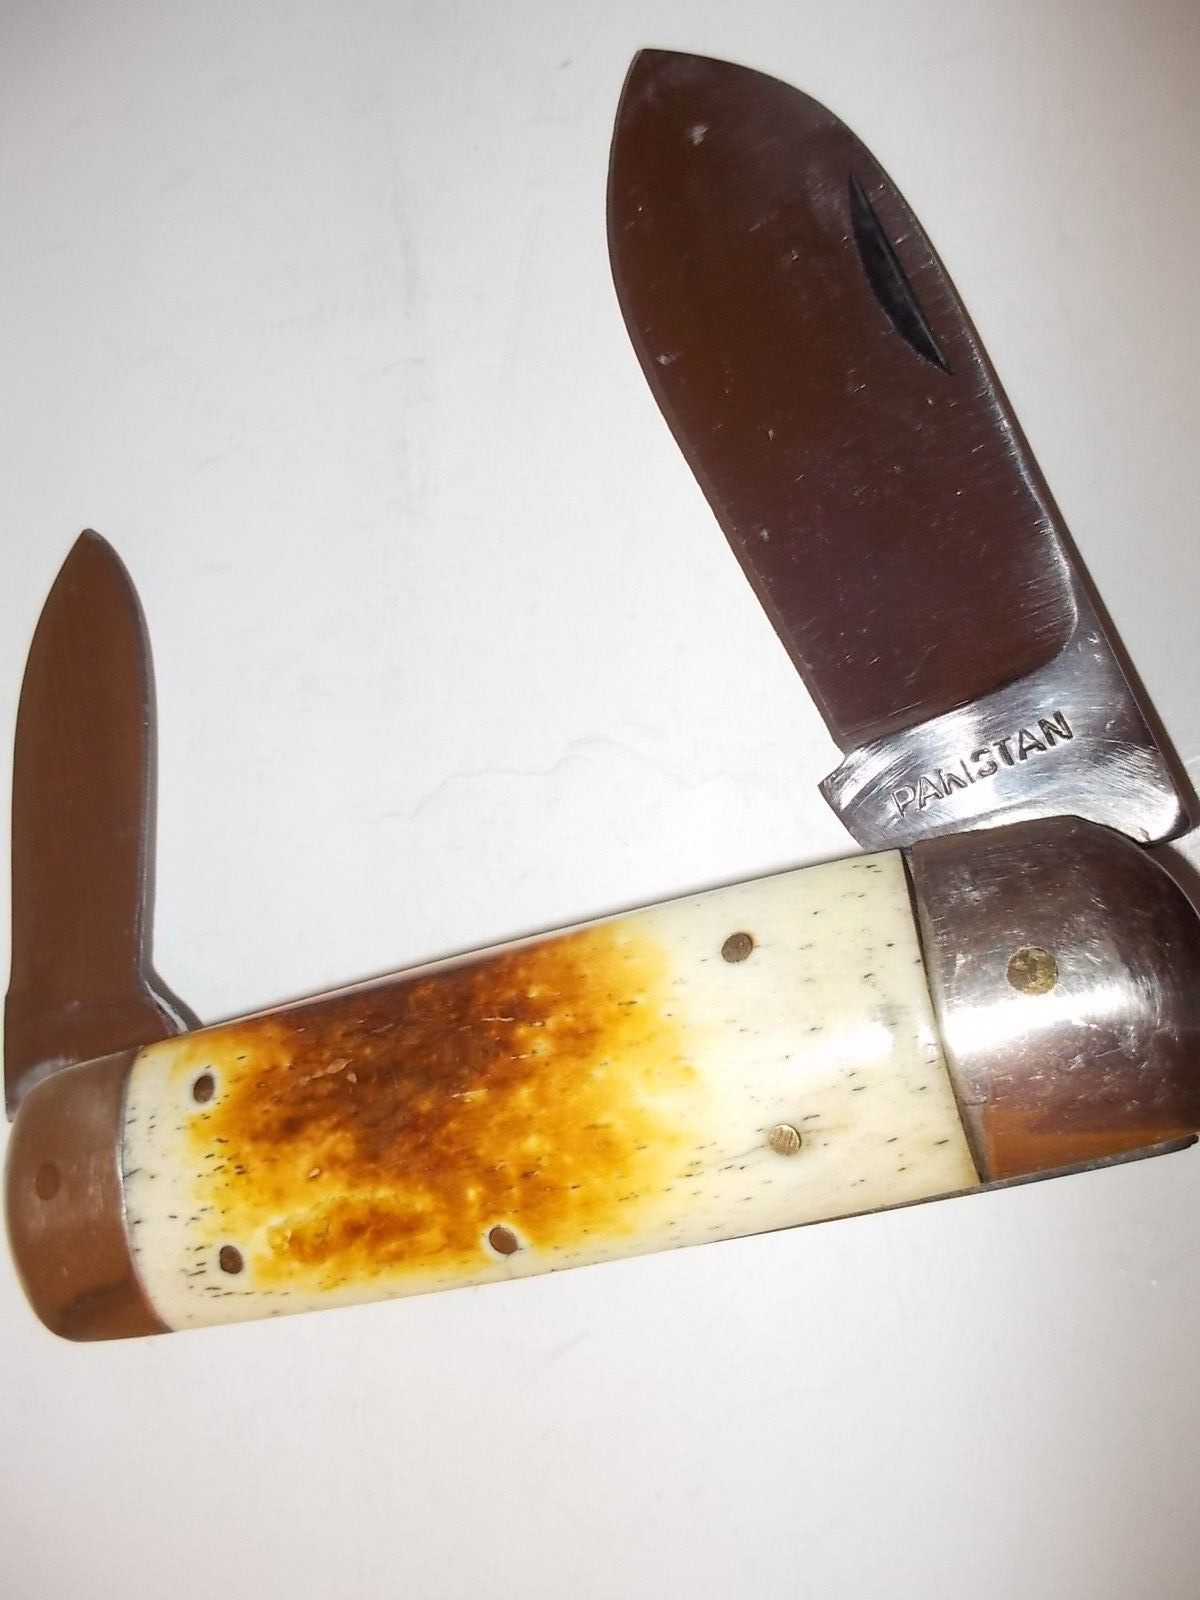 SPORTS KNIFE PAKISTAN MANUAL VINTAGE Stainless Folding STAG HANDLE Pocket Knife